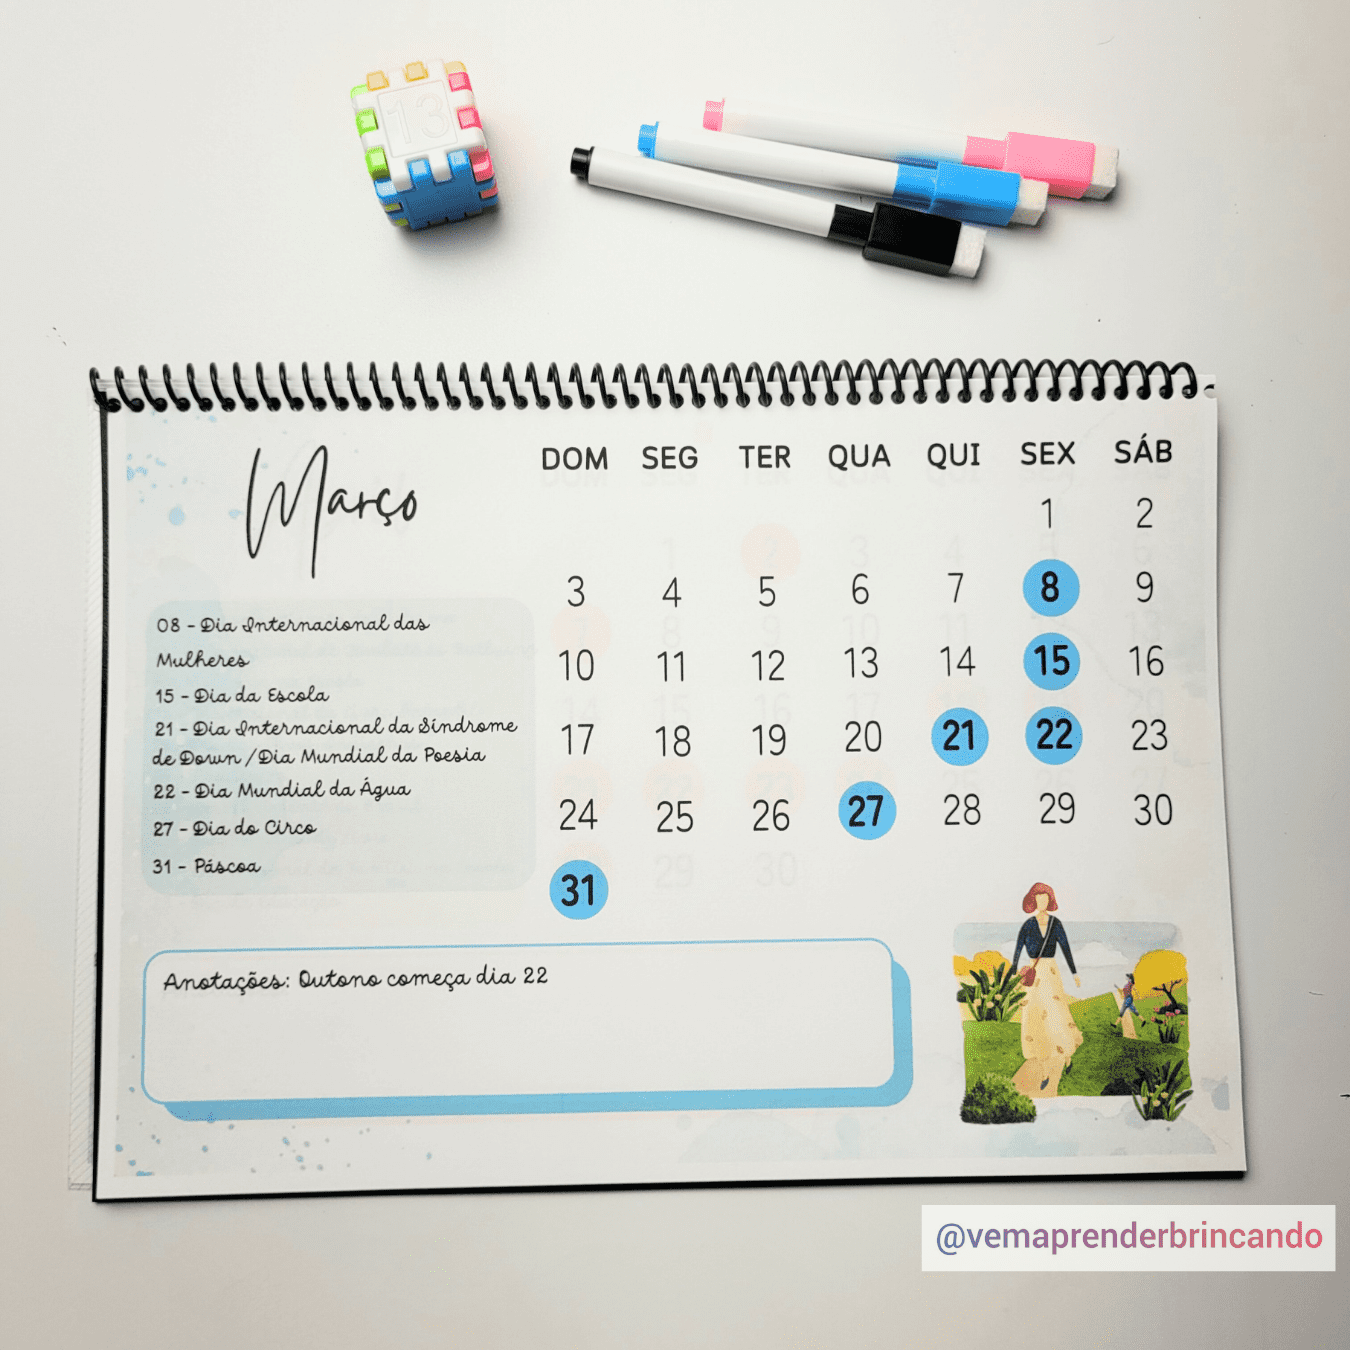 Calendario-Escolar-_datas-comemorativas_-4